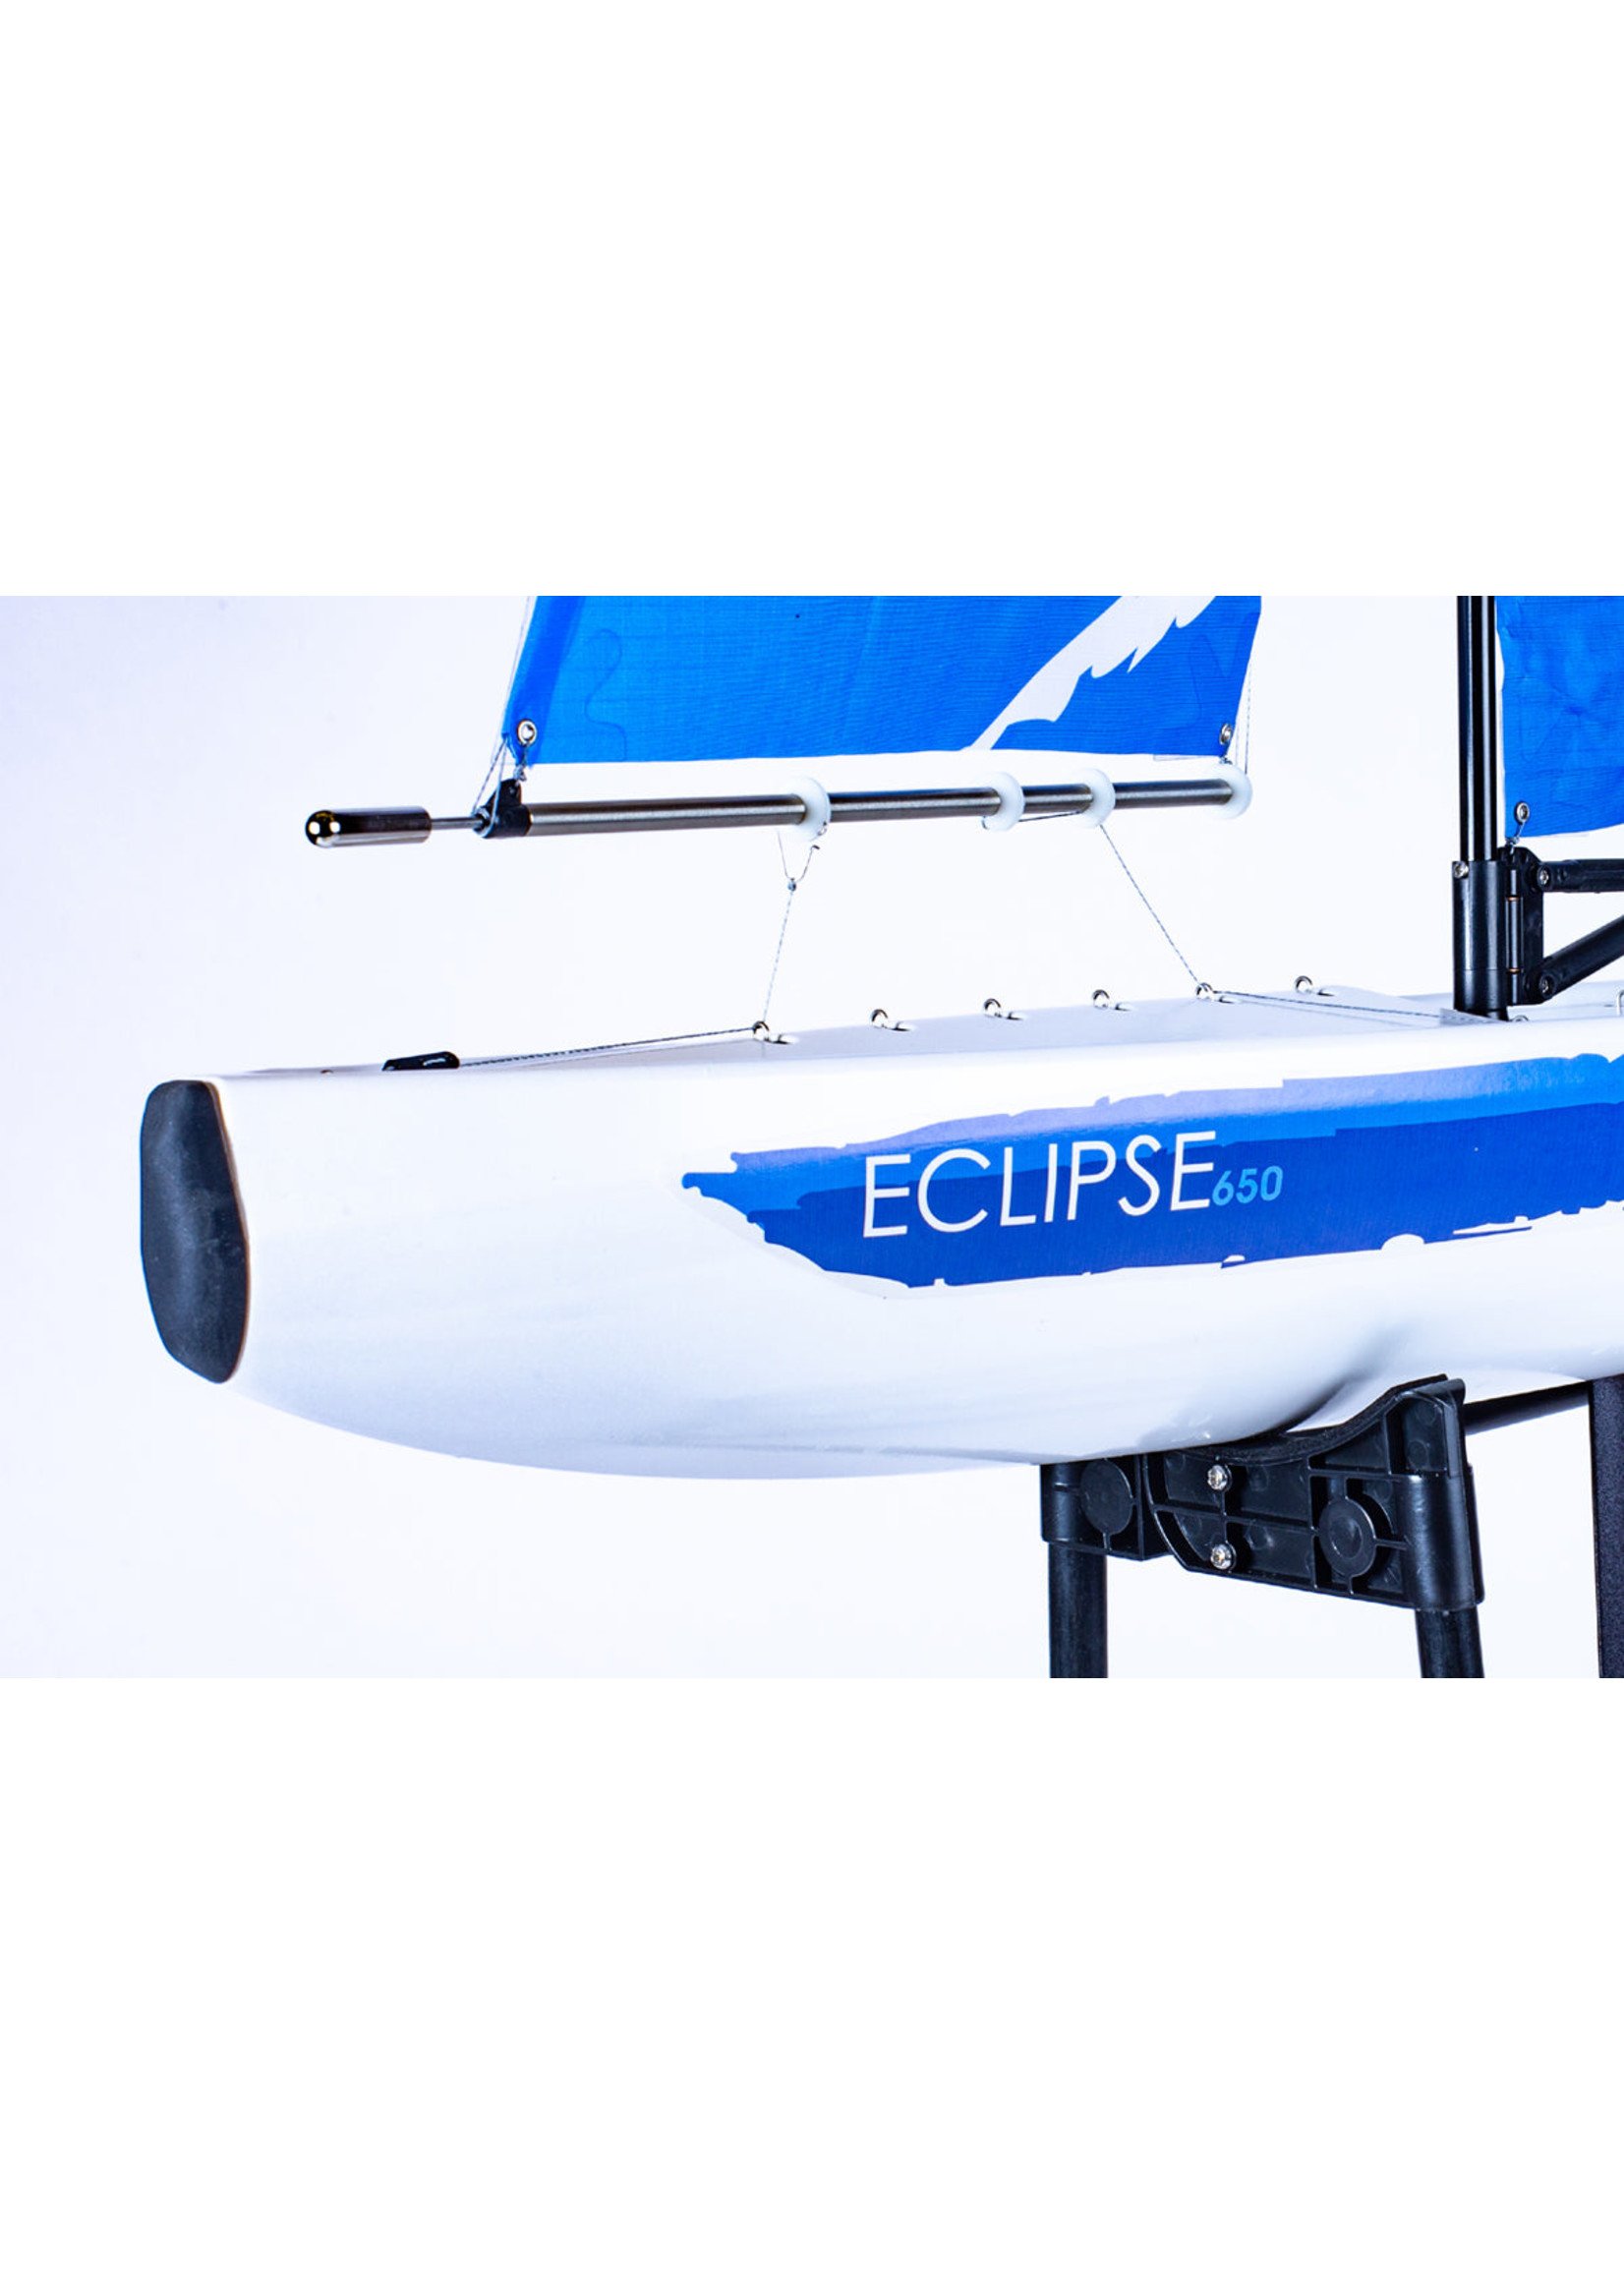 Rage RC Eclipse 650 RTR Sailboat